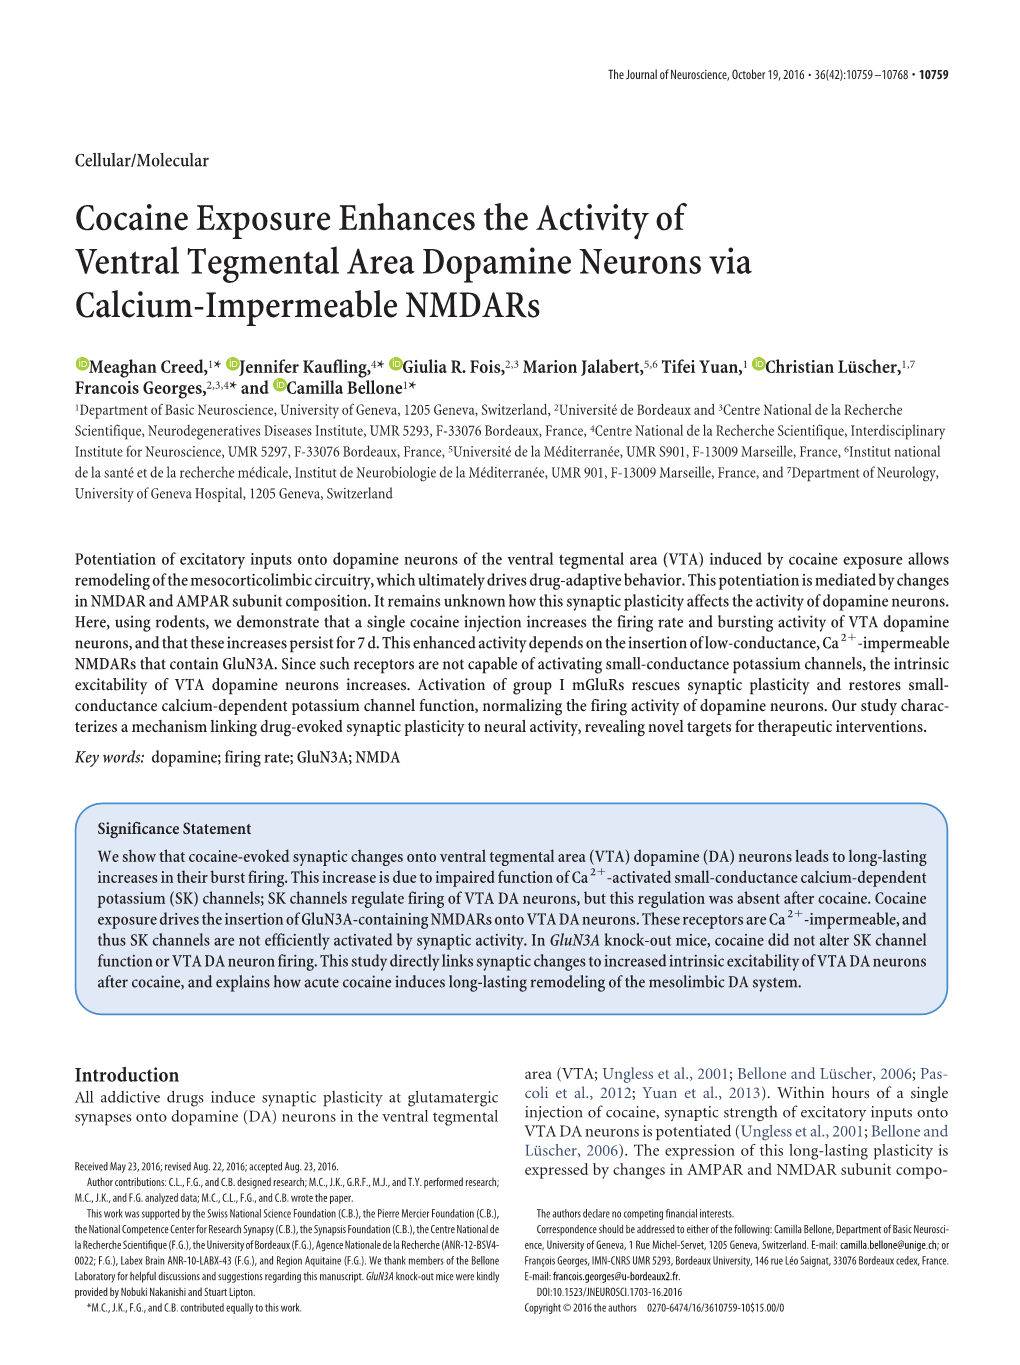 Cocaine Exposure Enhances the Activity of Ventral Tegmental Area Dopamine Neurons Via Calcium-Impermeable Nmdars